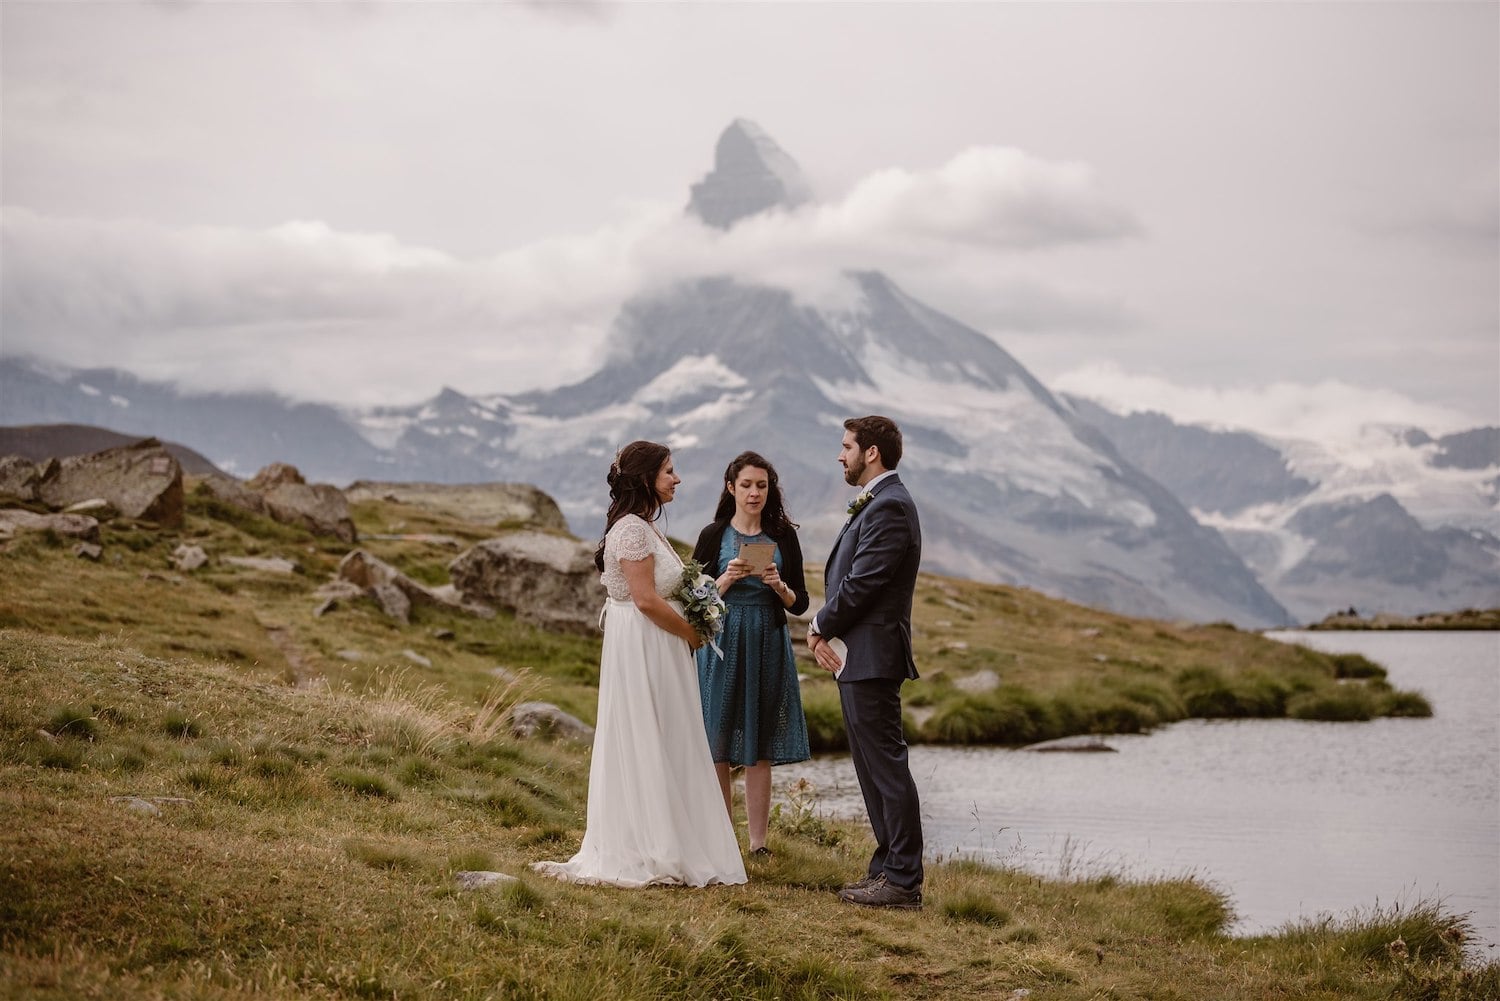 A summer elopement in Zermatt, Switzerland